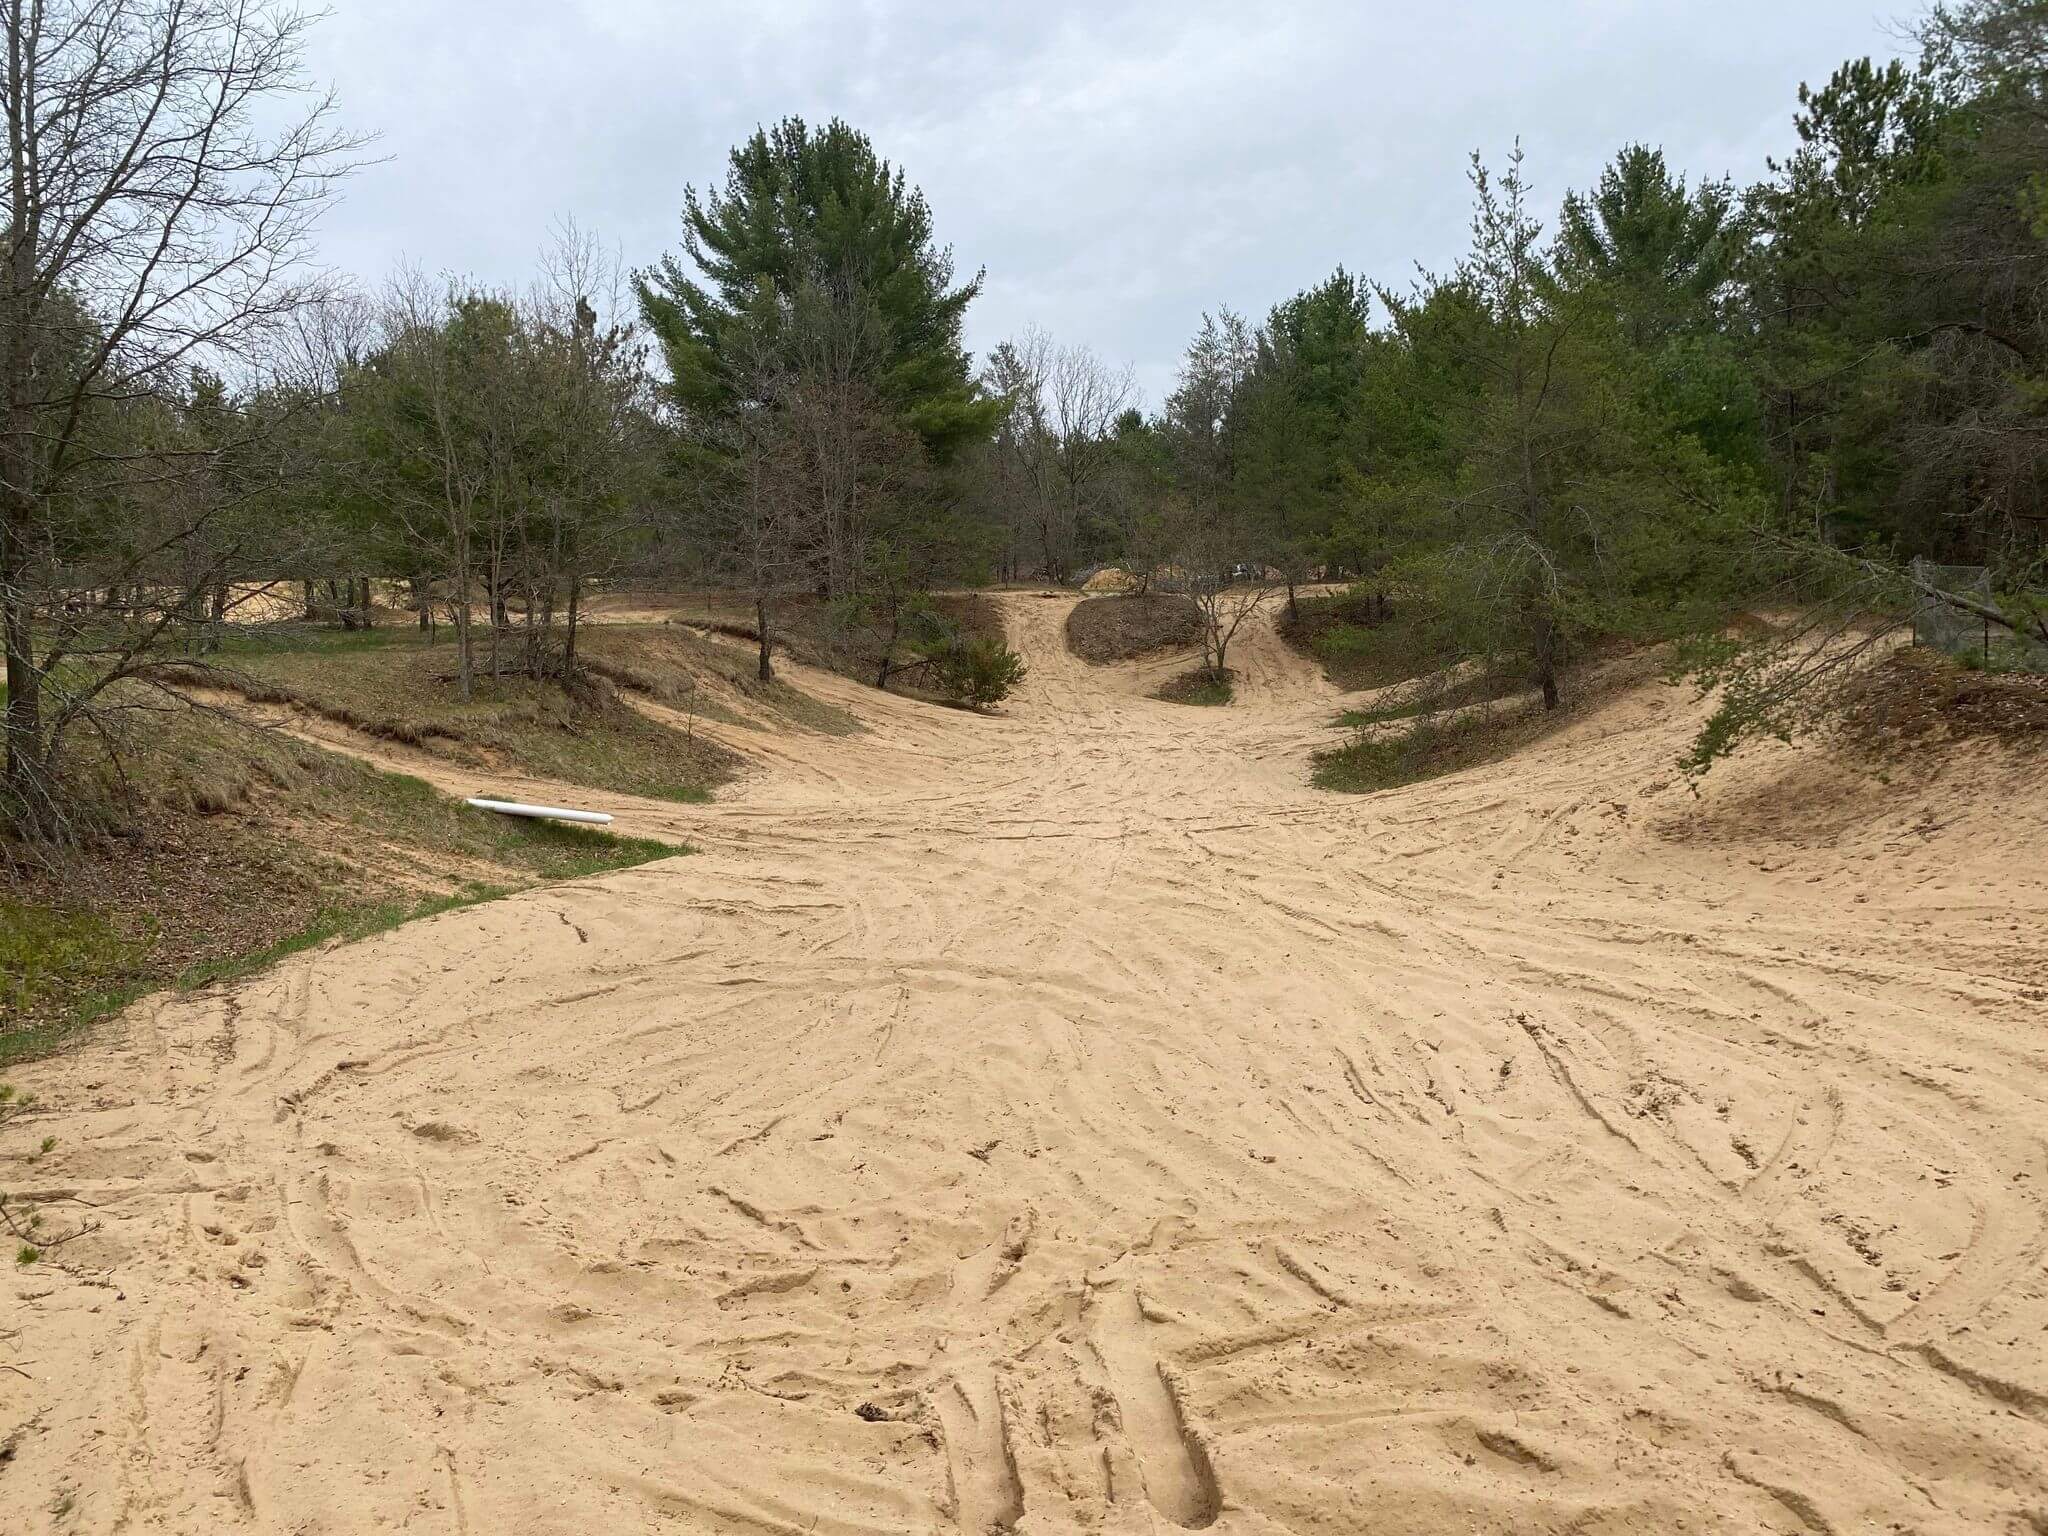 Sandy ORV trail